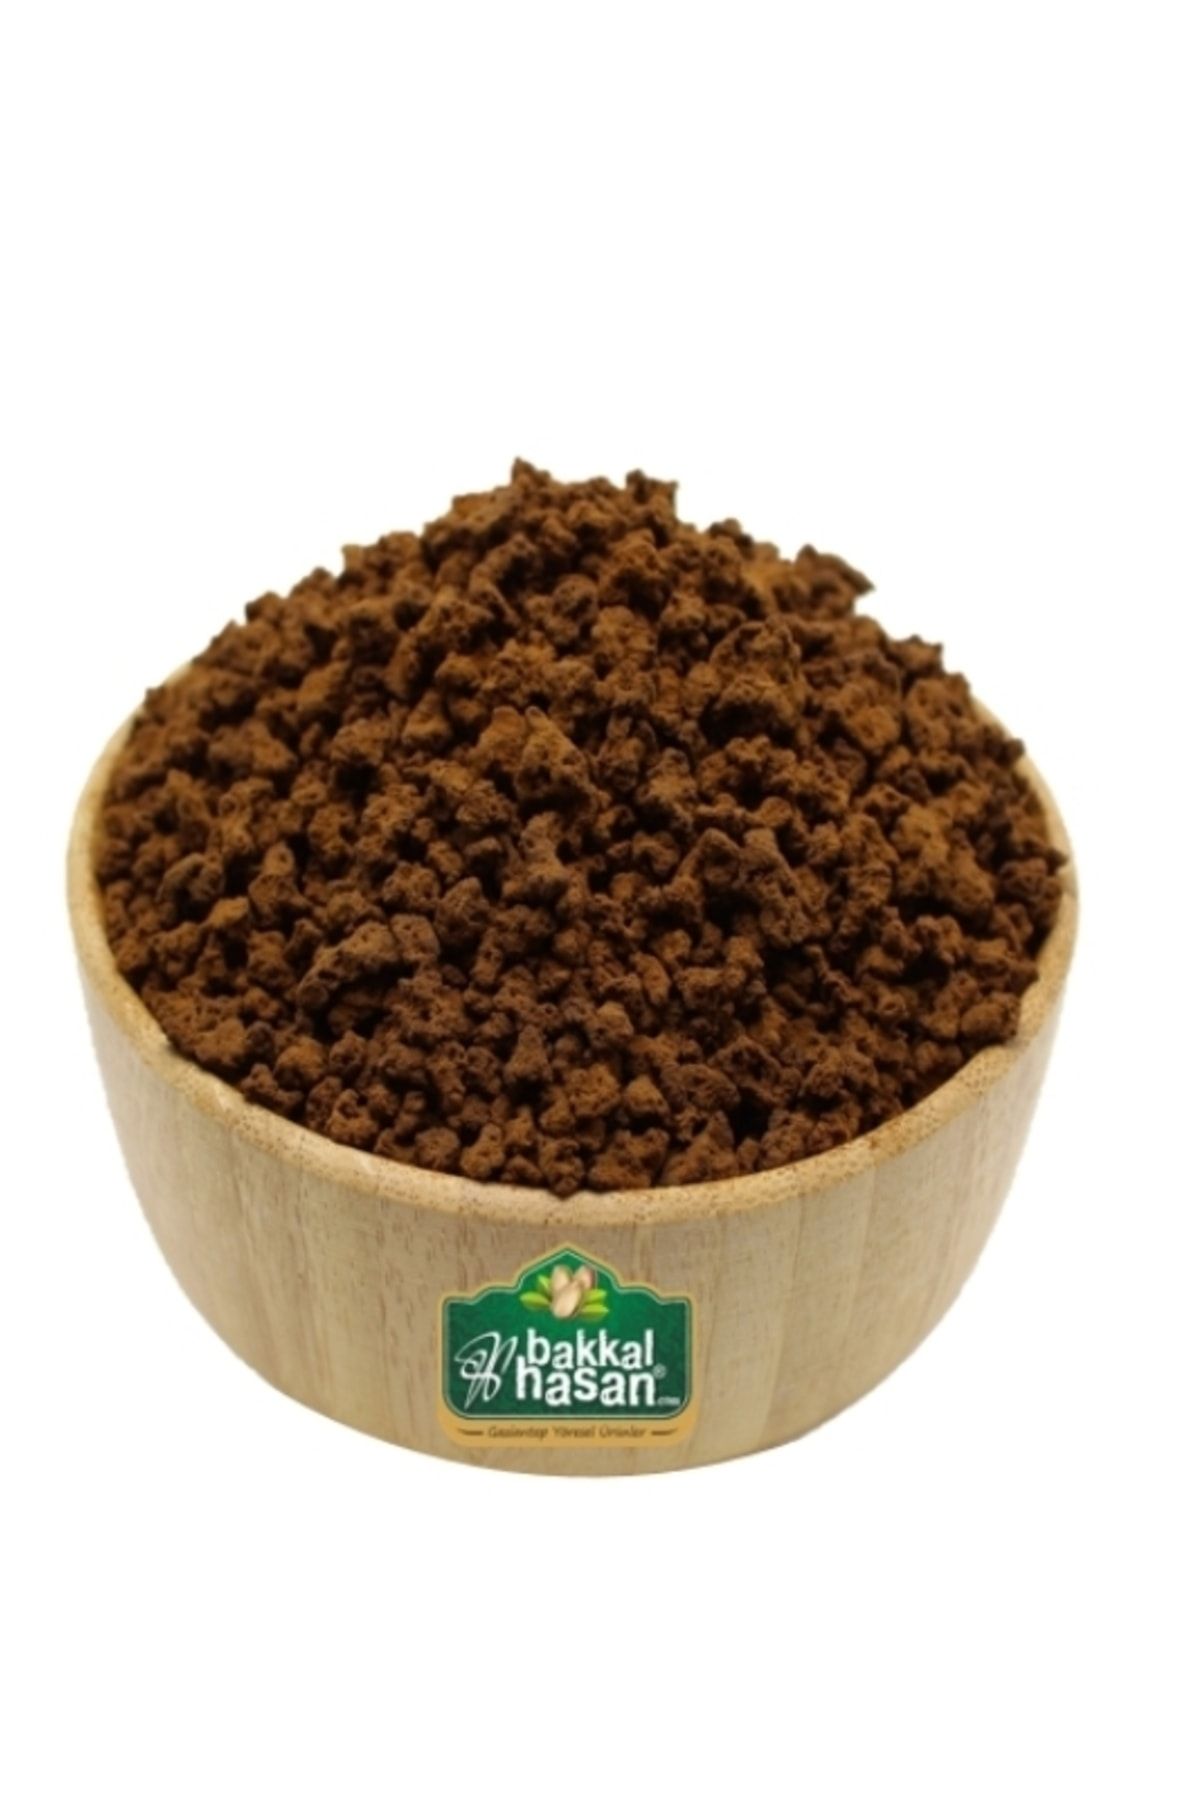 bakkal hasan Kahve Klasik Granül - 5 Kg